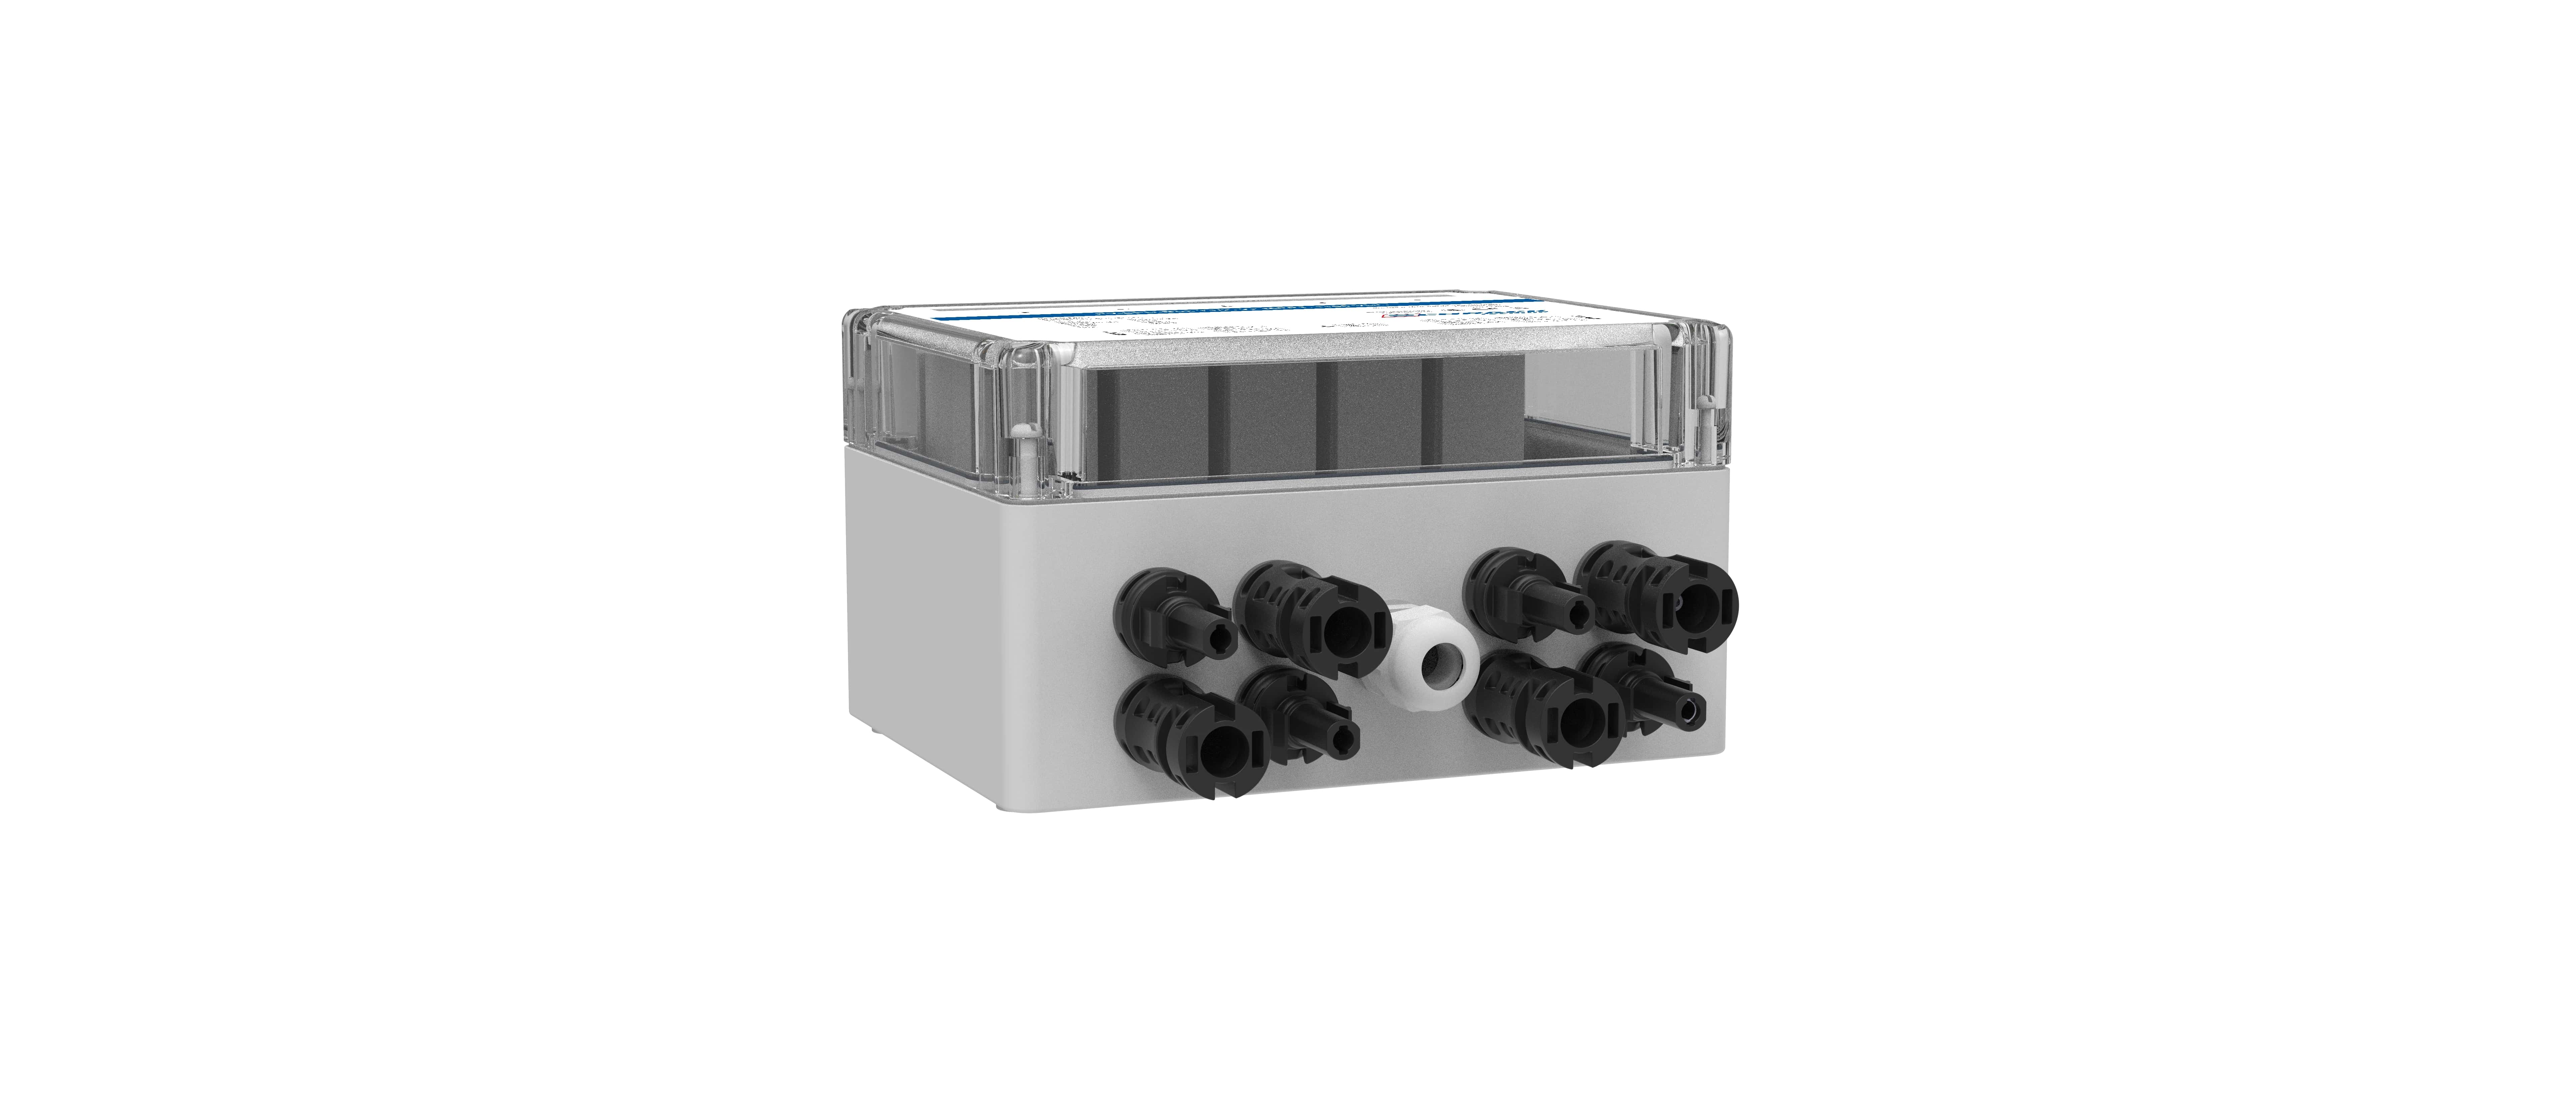 PV-SPD-Box T1/2, 2x MPPT, 1100VDC, MC4 Anschluss